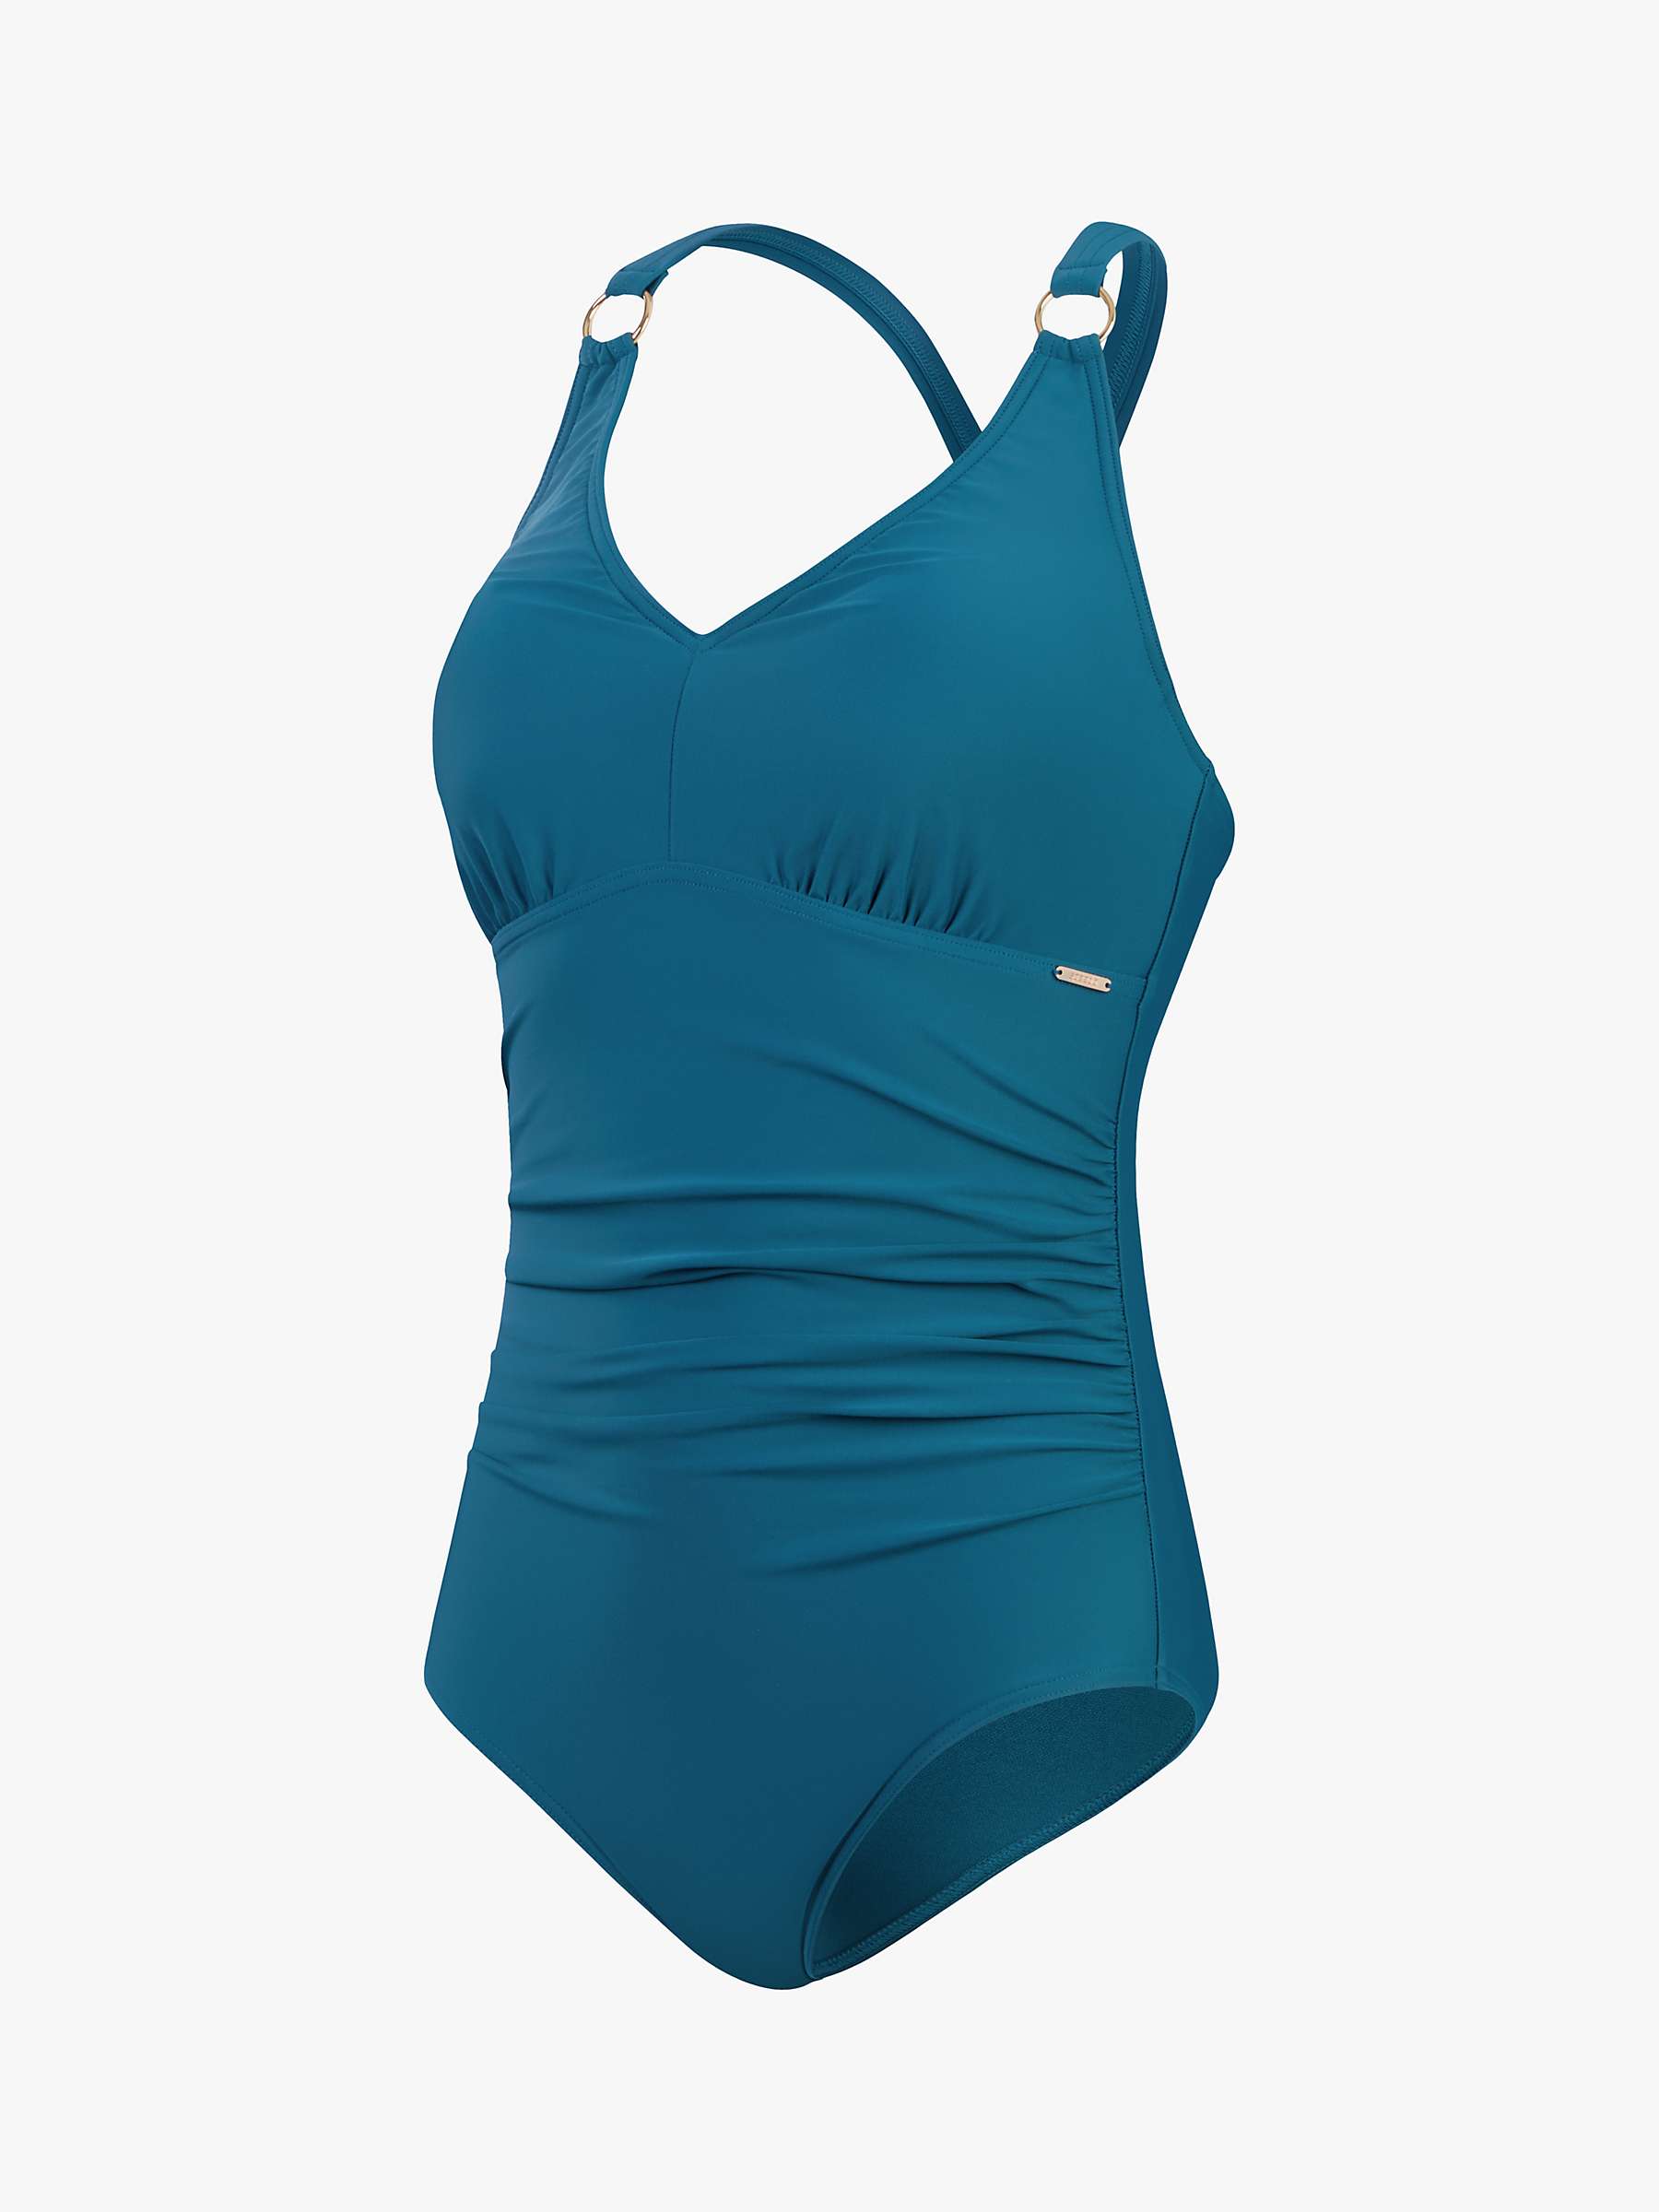 Buy Speedo Shaping ContourEclipse Swimsuit, Dark Teal Online at johnlewis.com